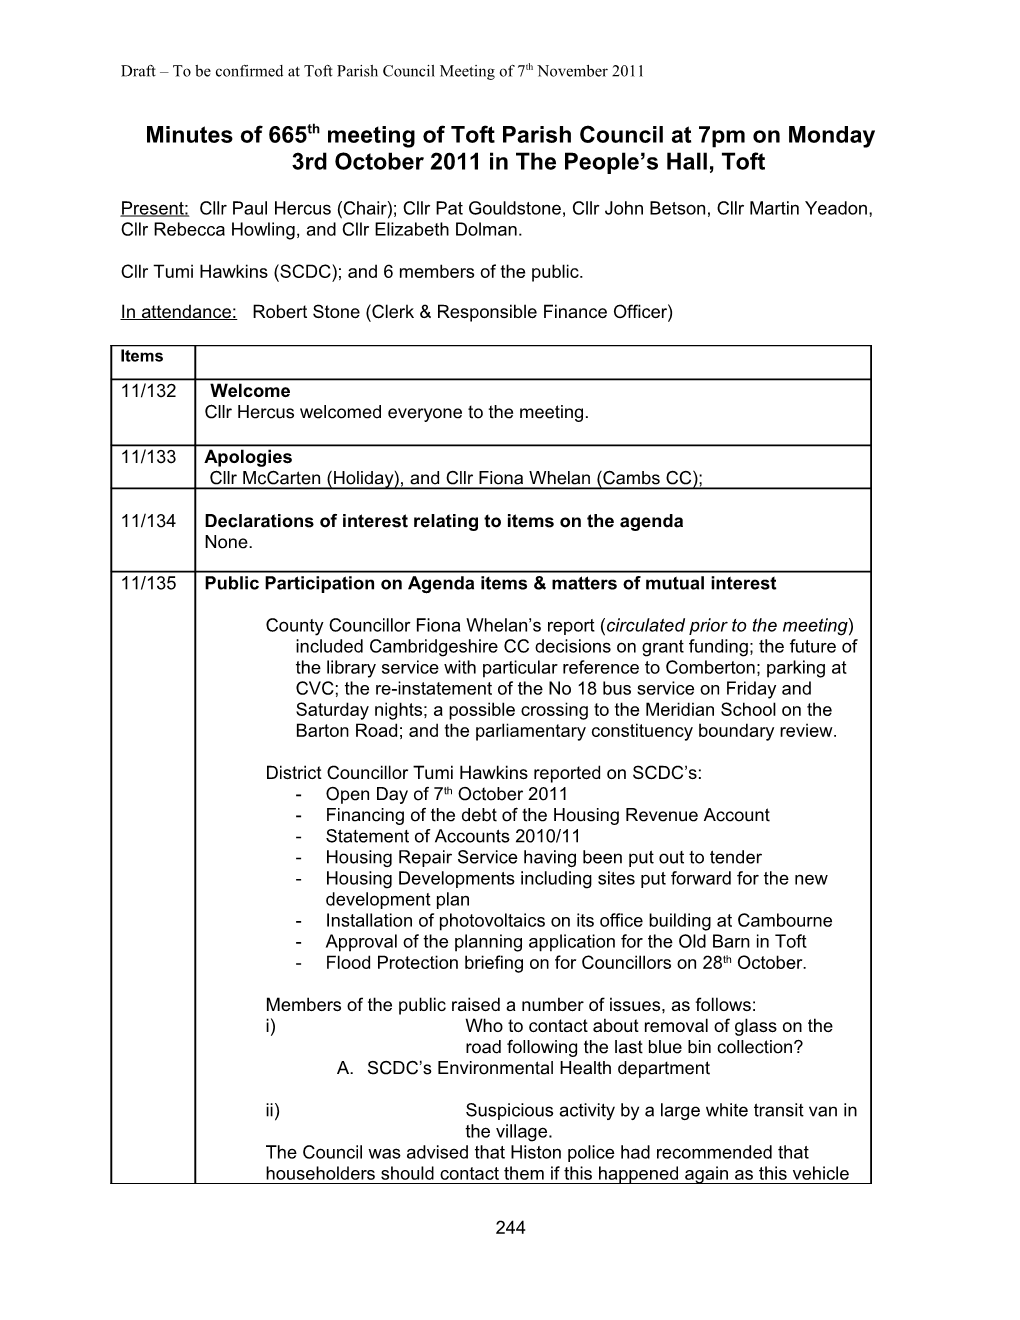 Draft to Be Confirmed at Toft Parish Council Meeting of 7Th November 2011